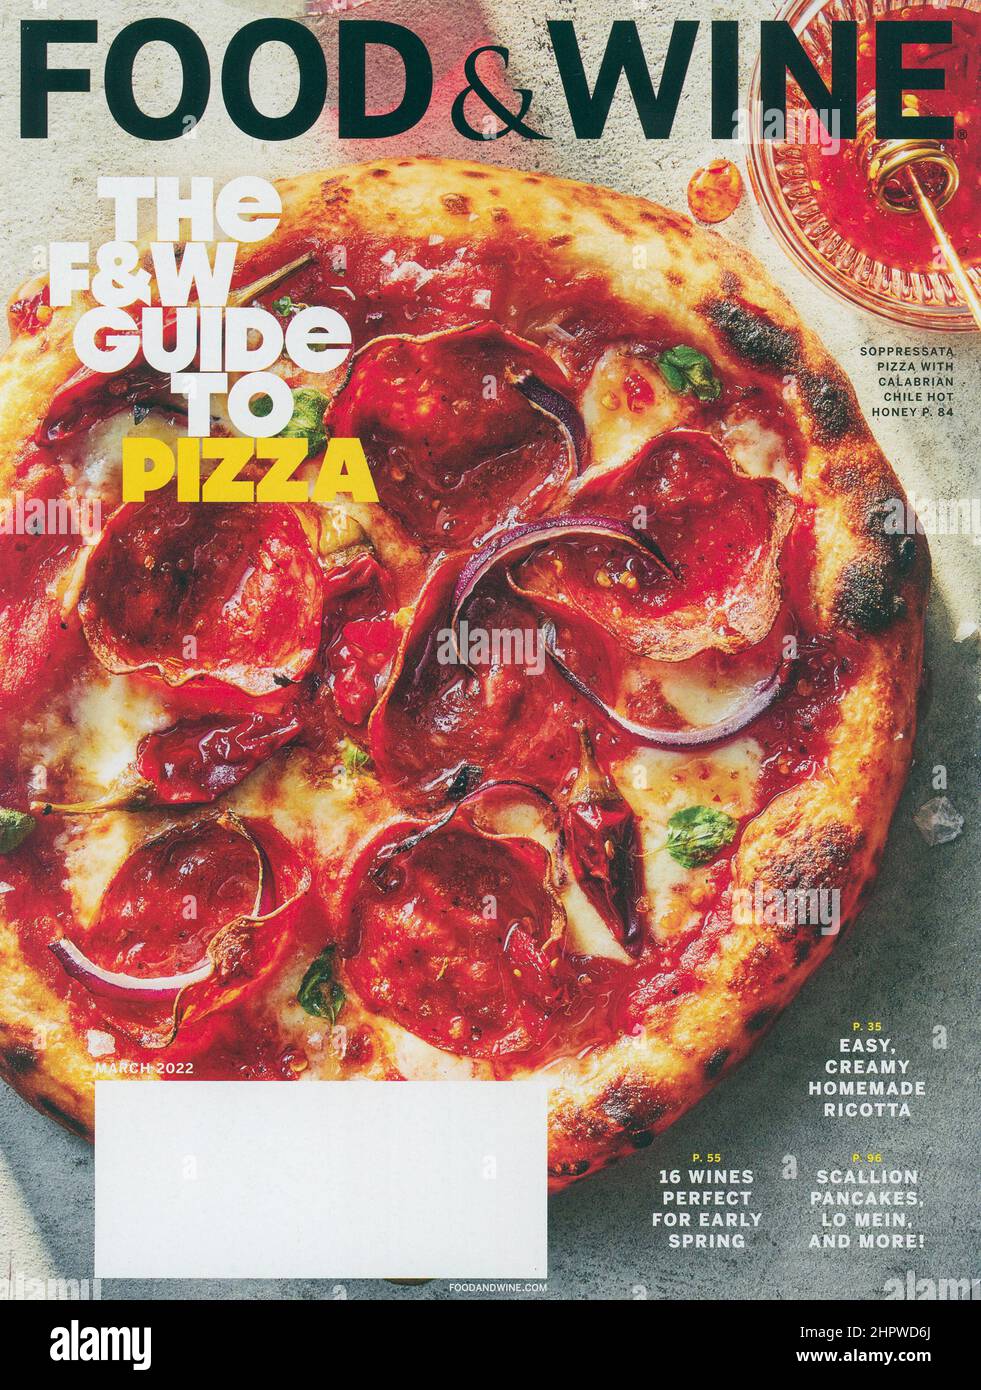 Portada de revista de comida fotografías e imágenes de alta resolución -  Alamy